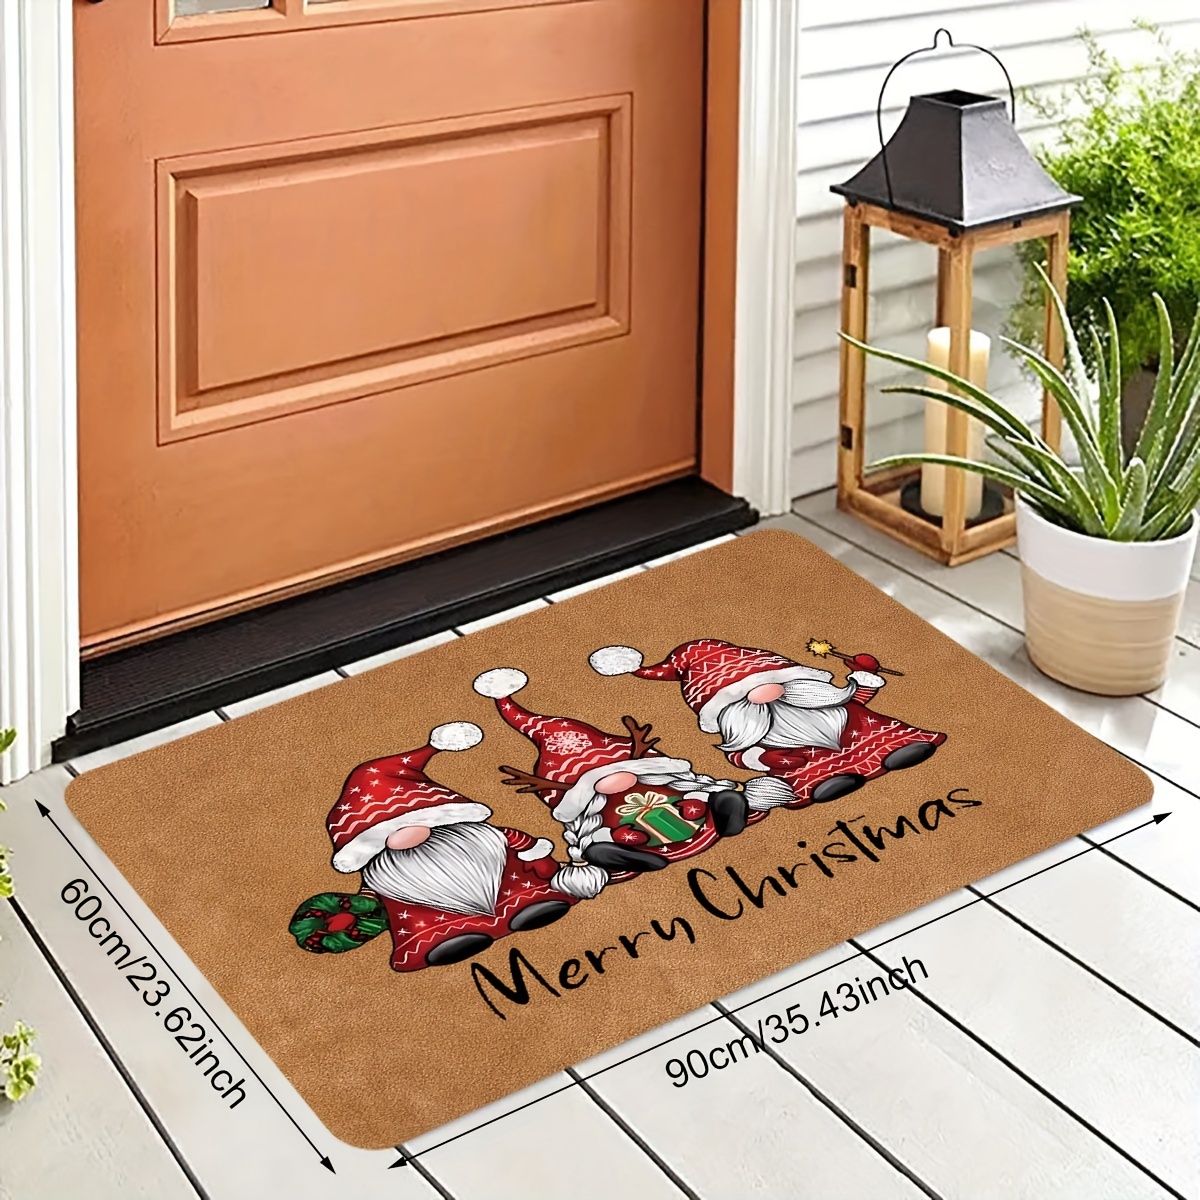 Santa Claus Doormat, Christmas Doormats